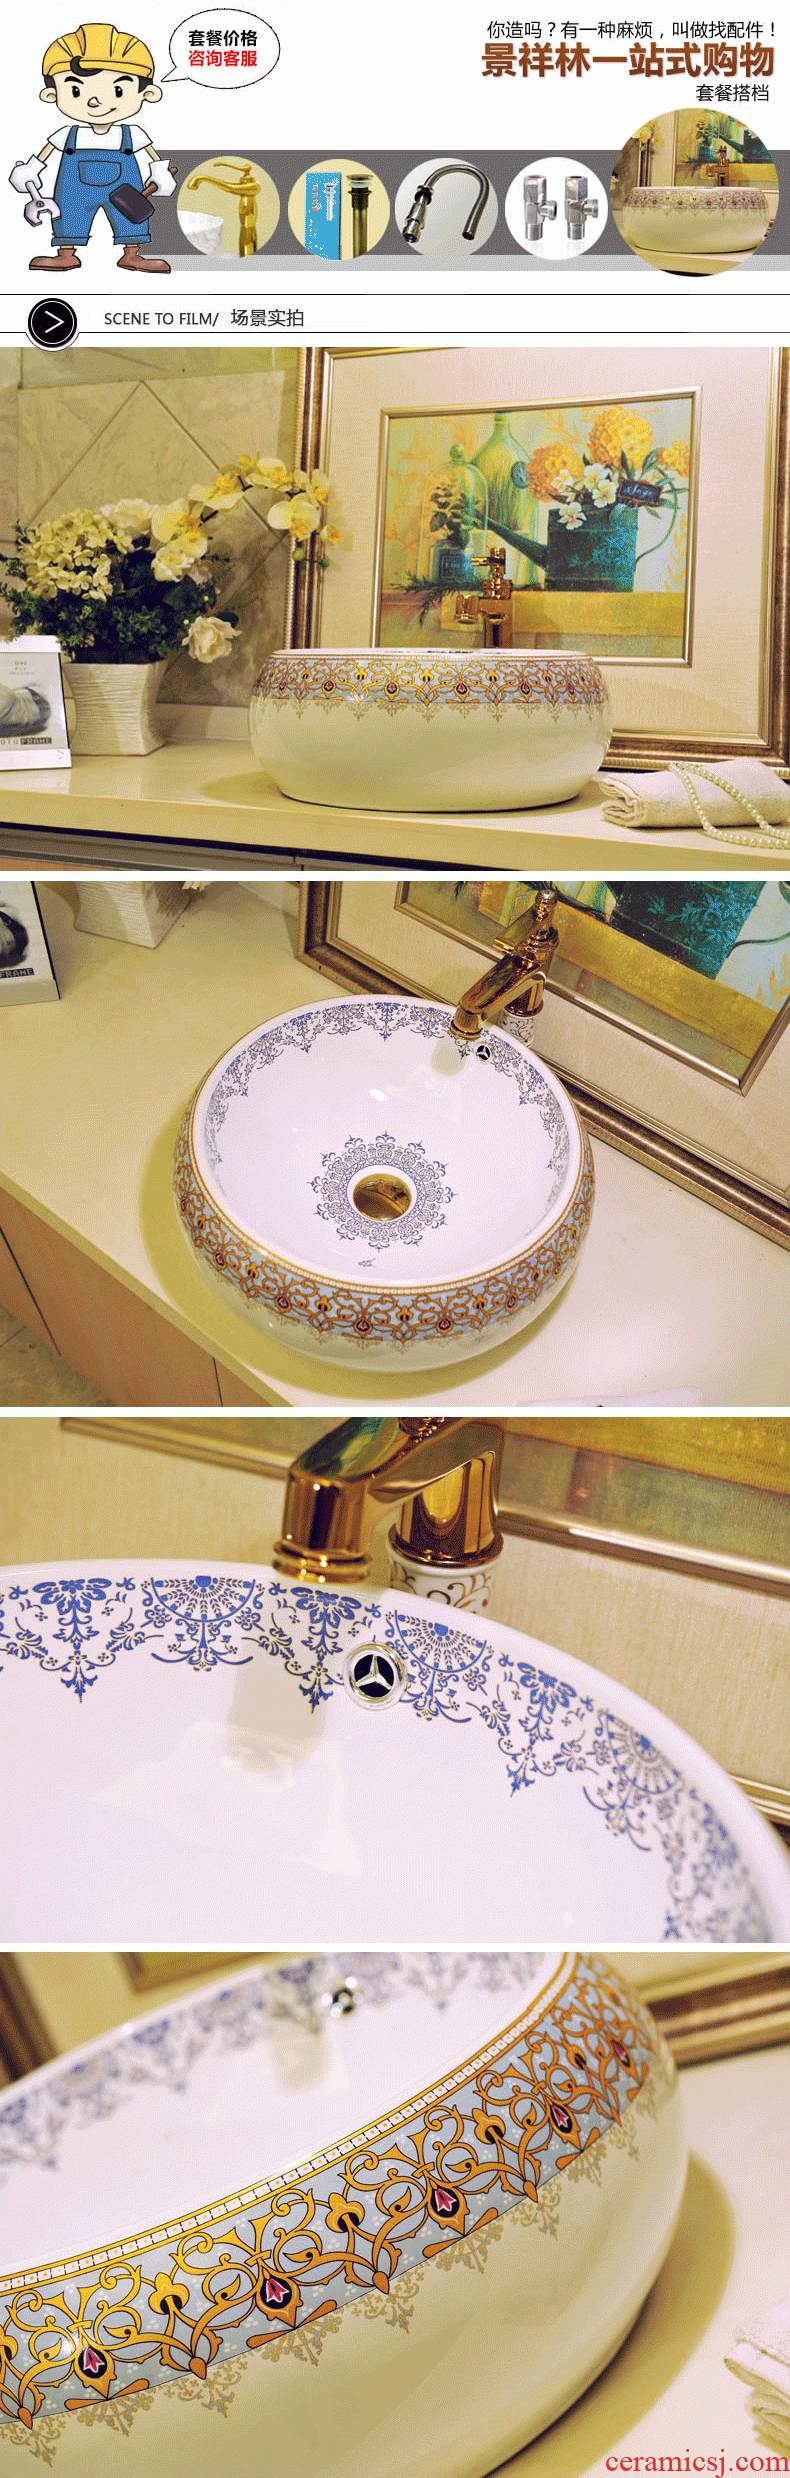 Stage basin ceramic art pattern the basin that wash a toilet lavabo, european-style circular lavatory basin spillway hole